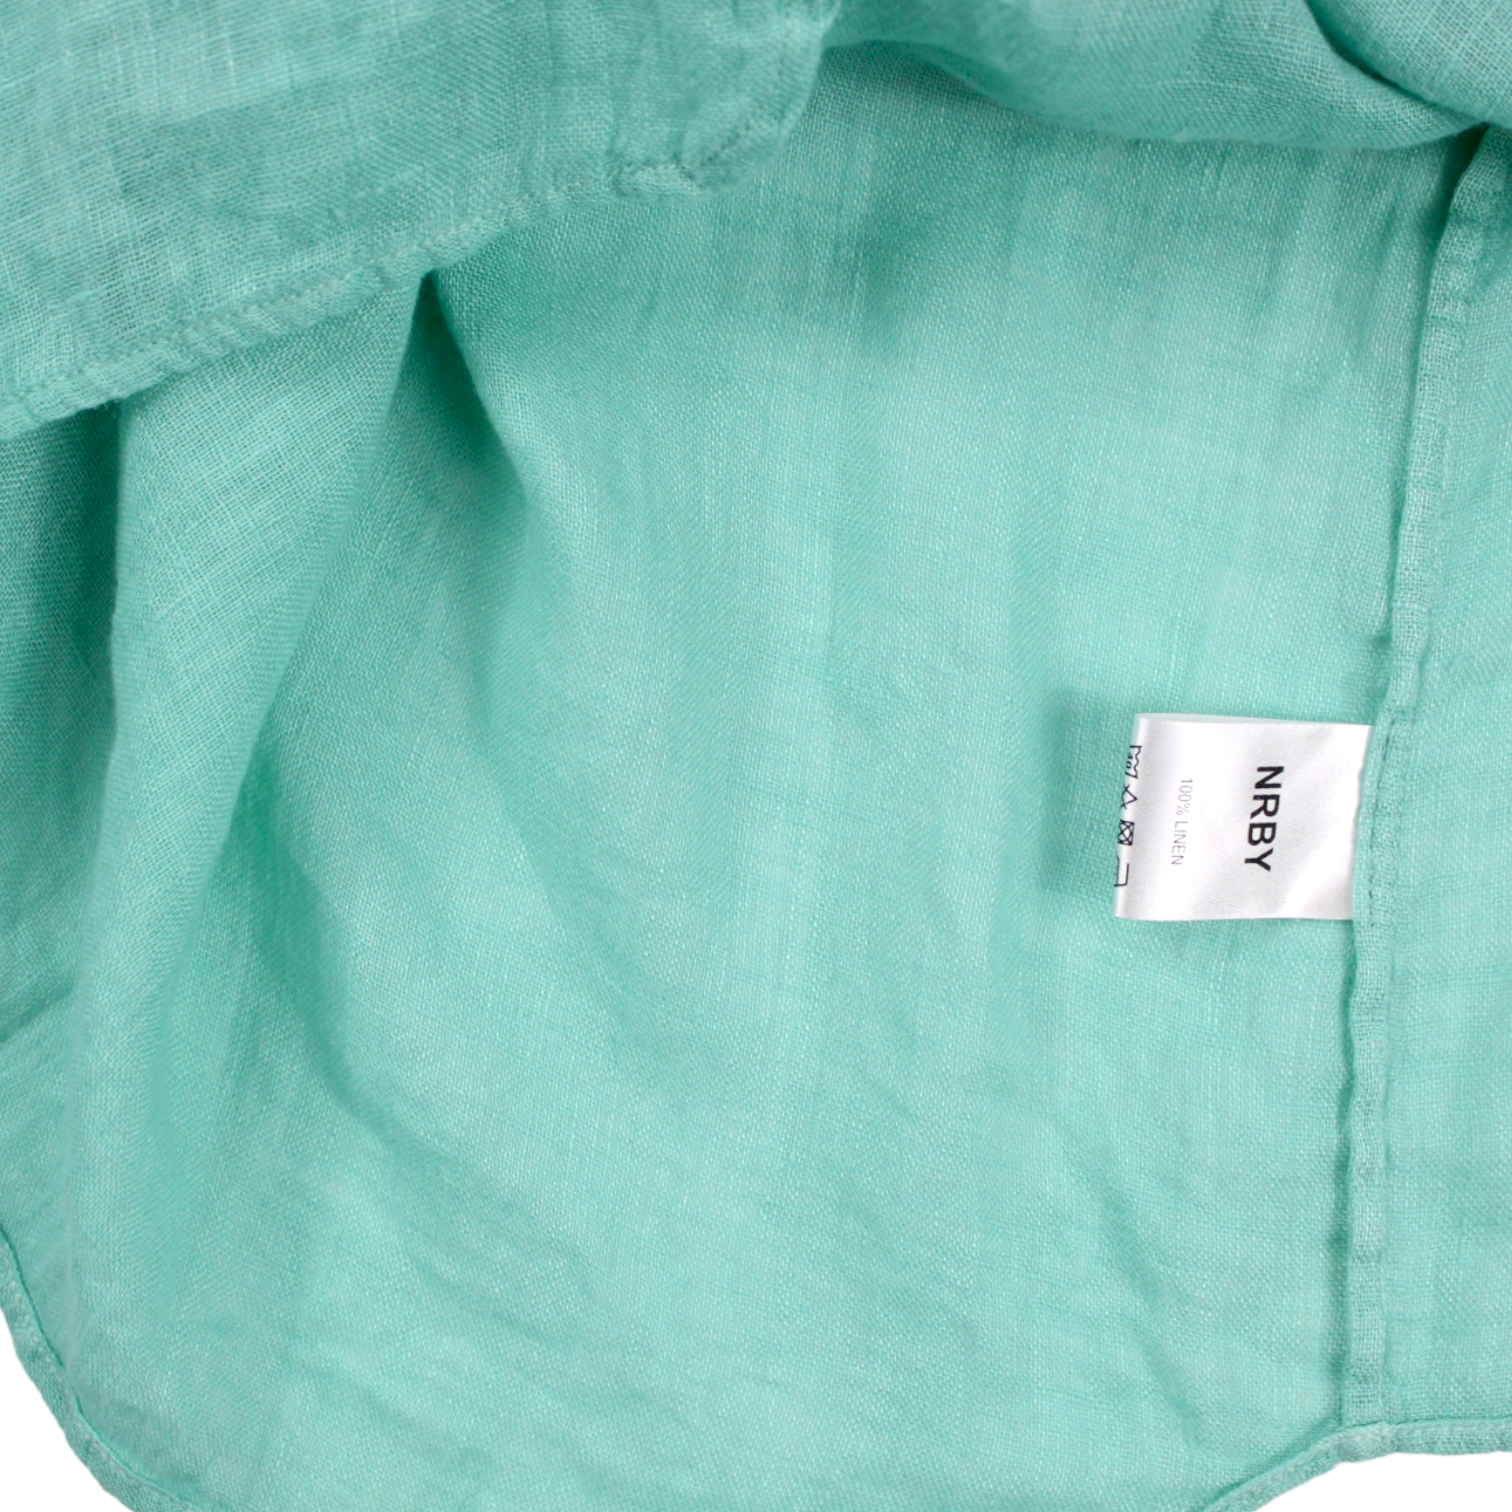 NRBY Green Chrissie Linen Maxi Dress - Sample